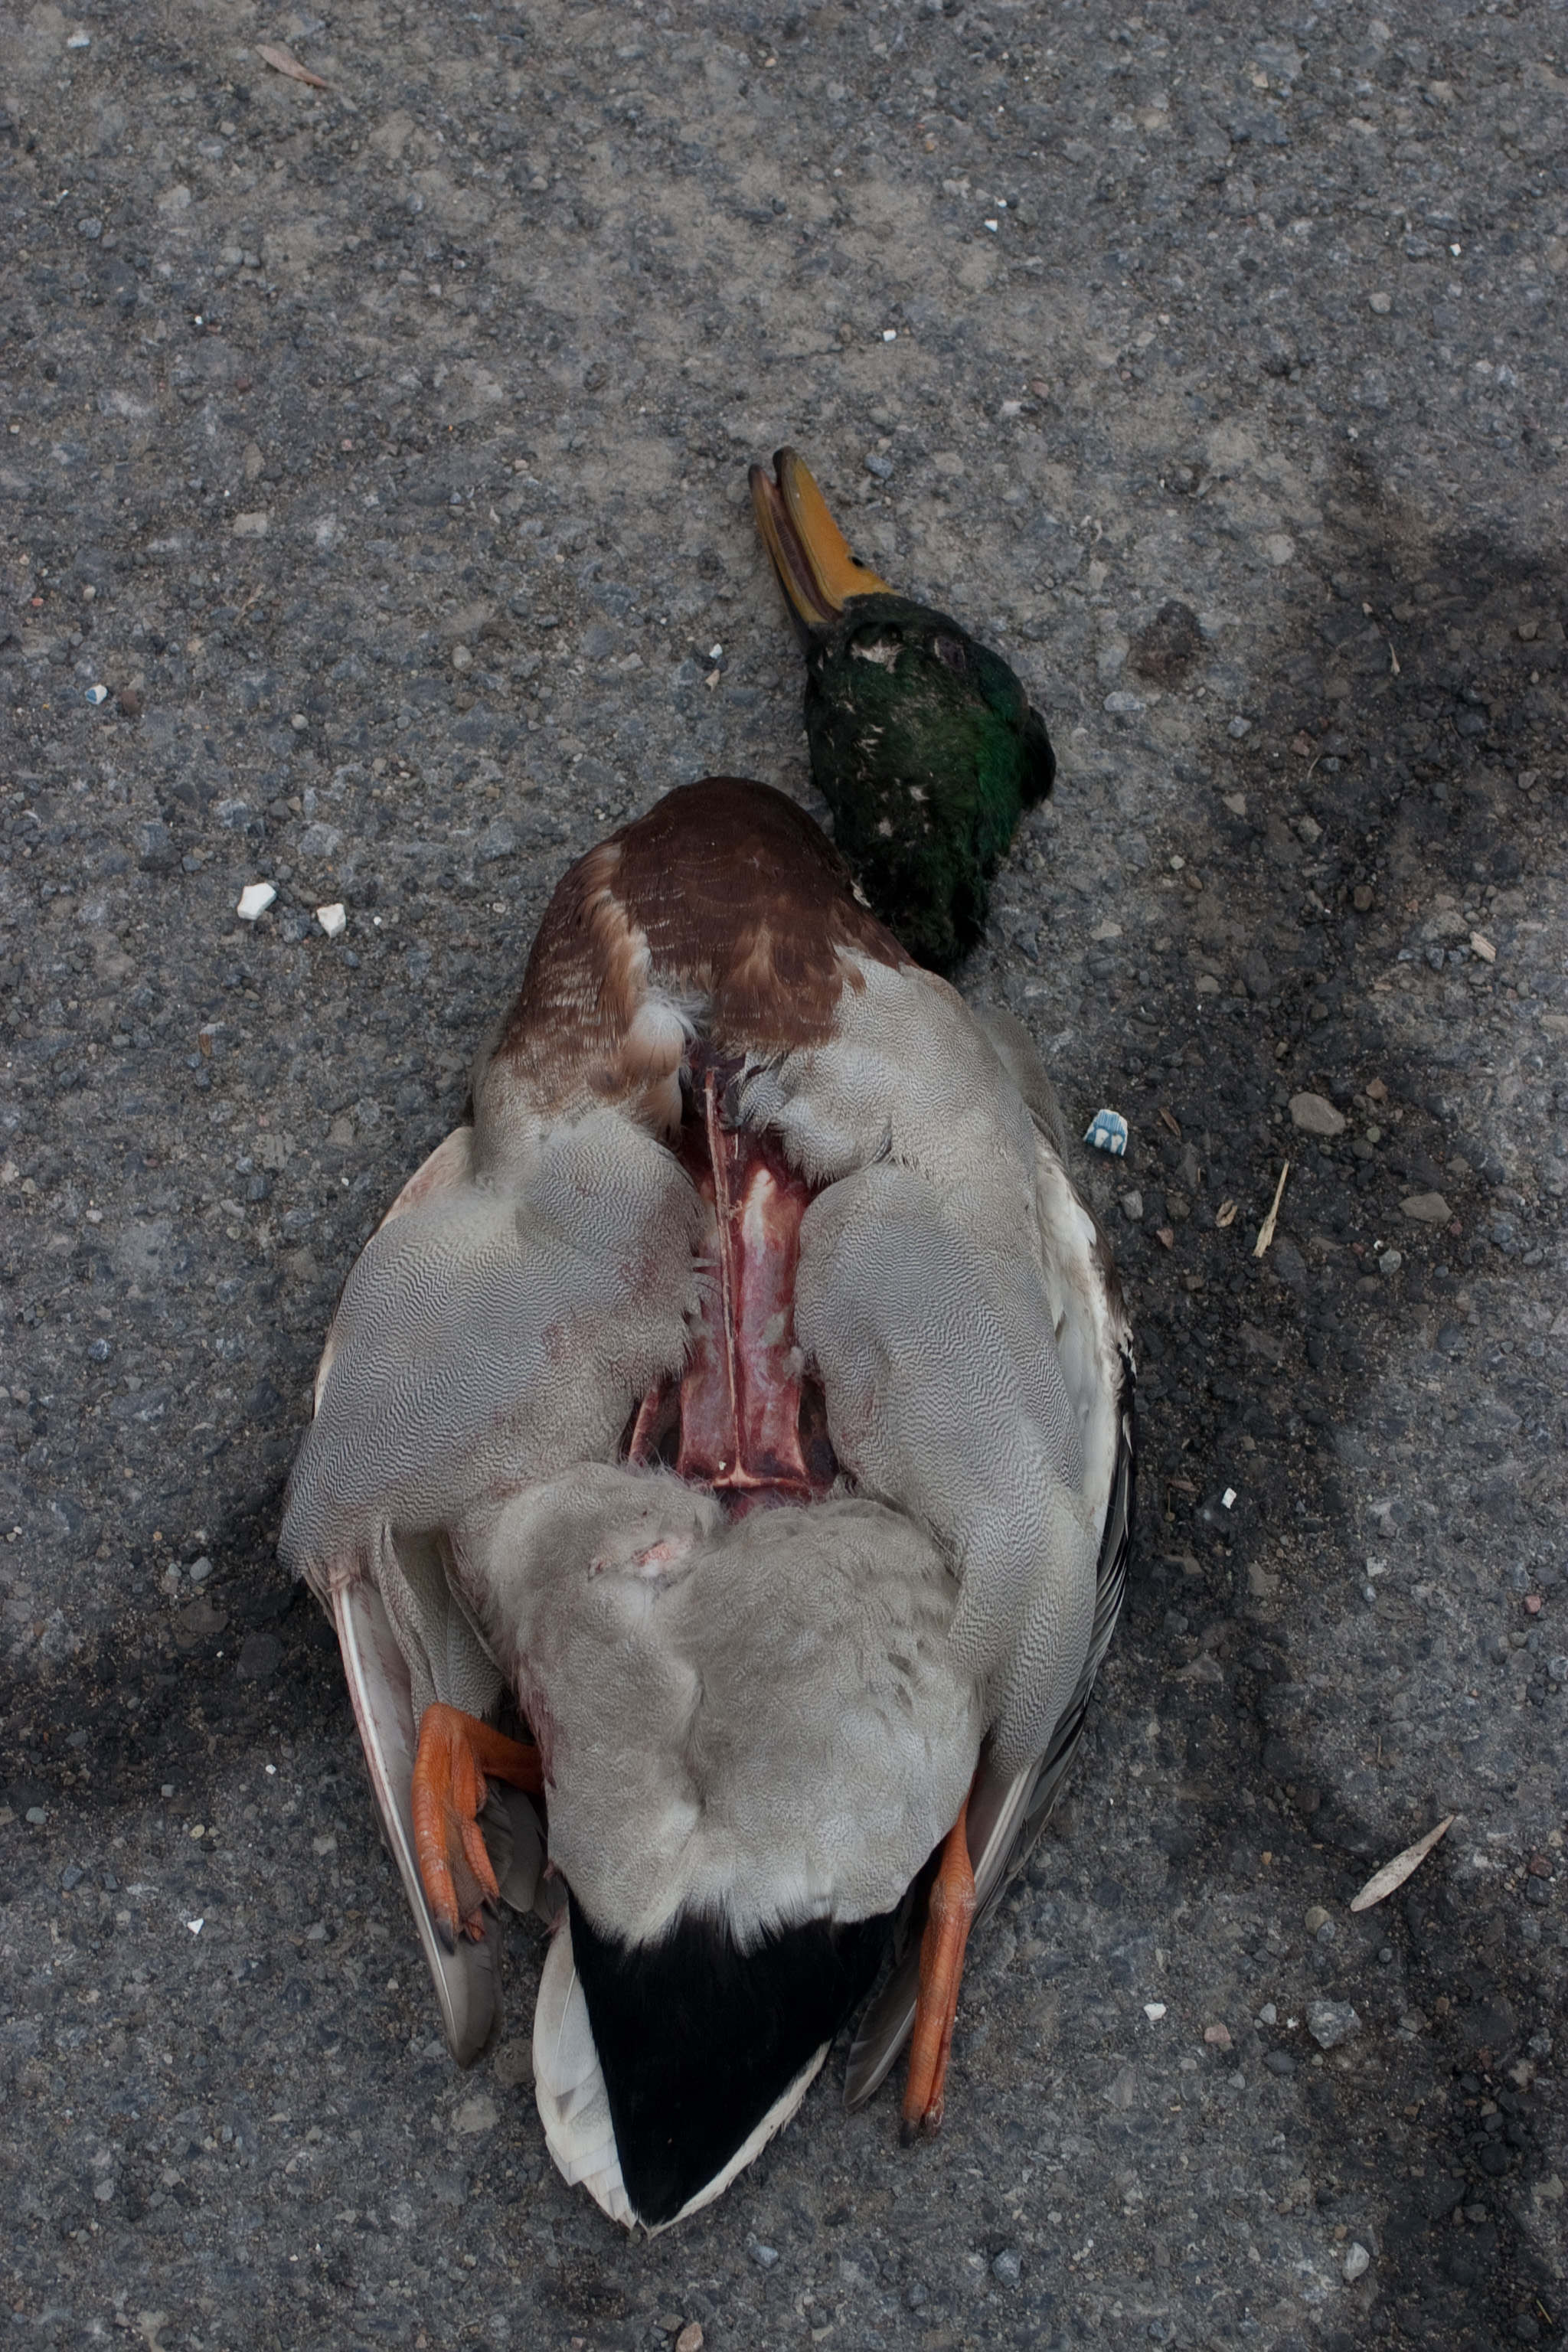 Conclusion: Interpreting the Meaning of Dead Birds: "Interpreting dead bird symbolism illustrations"